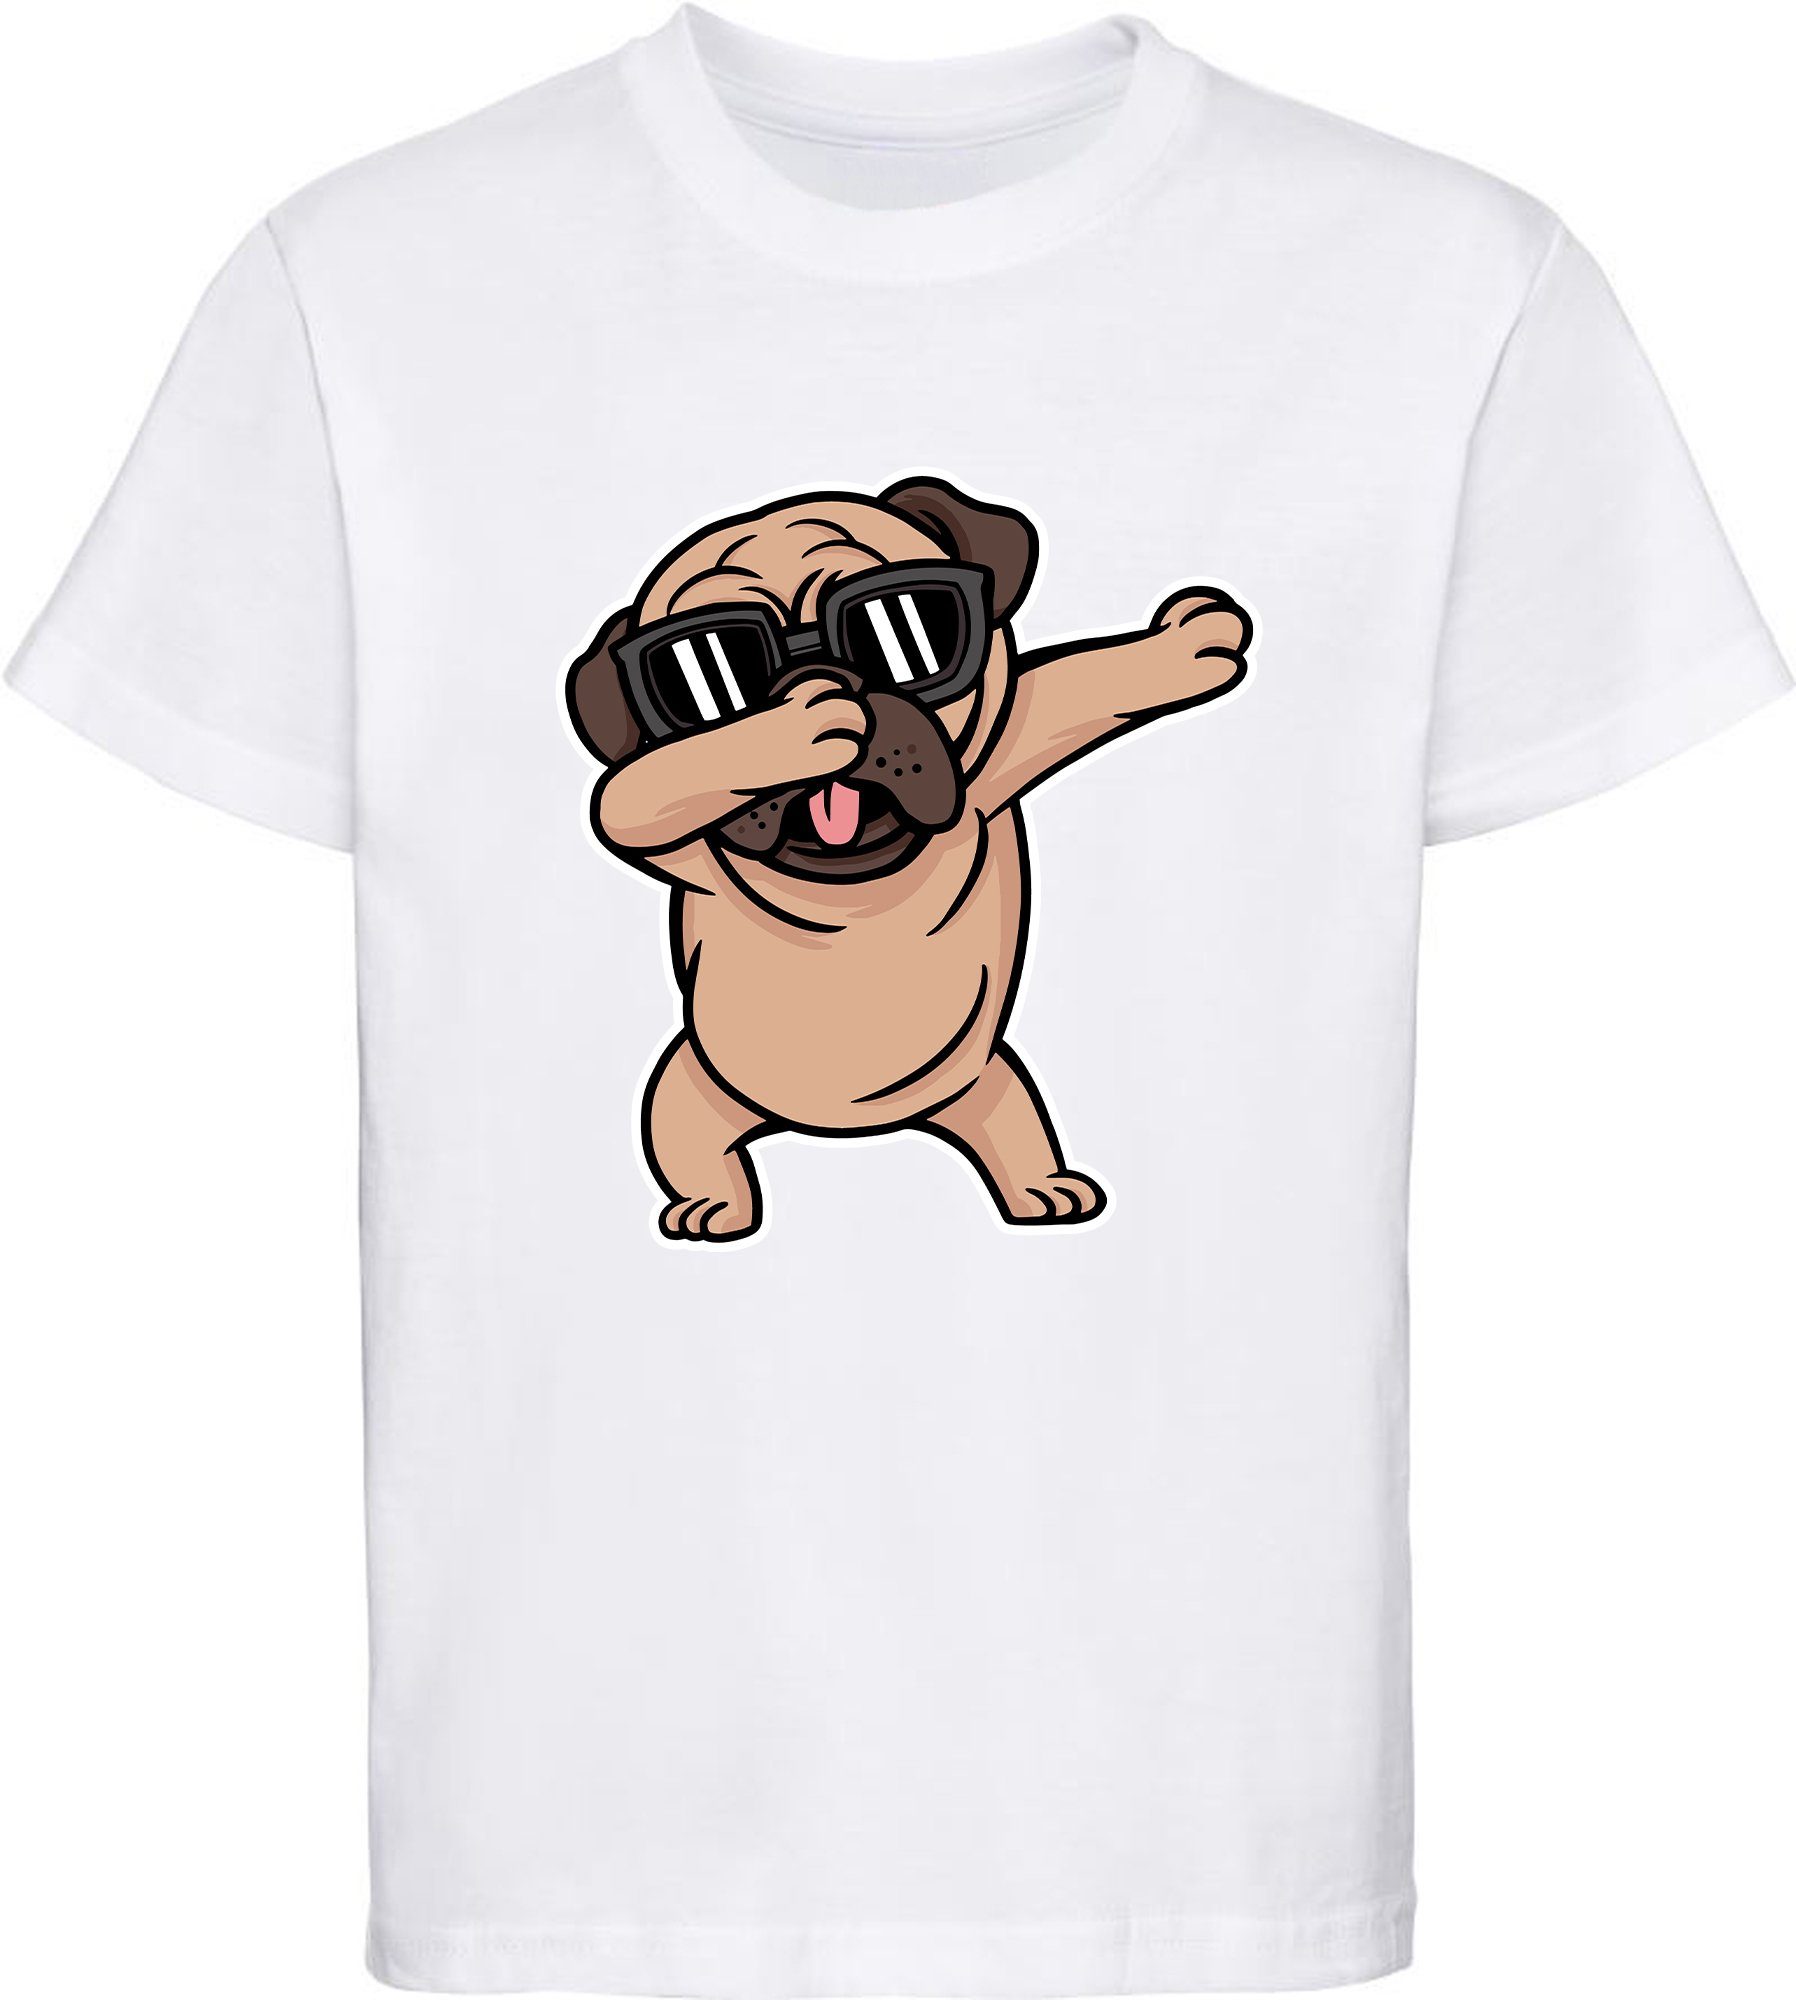 MyDesign24 Print-Shirt Kinder Hunde T-Shirt bedruckt - Cooler Hund mit Skateboard Baumwollshirt mit Aufdruck, i239 weiss